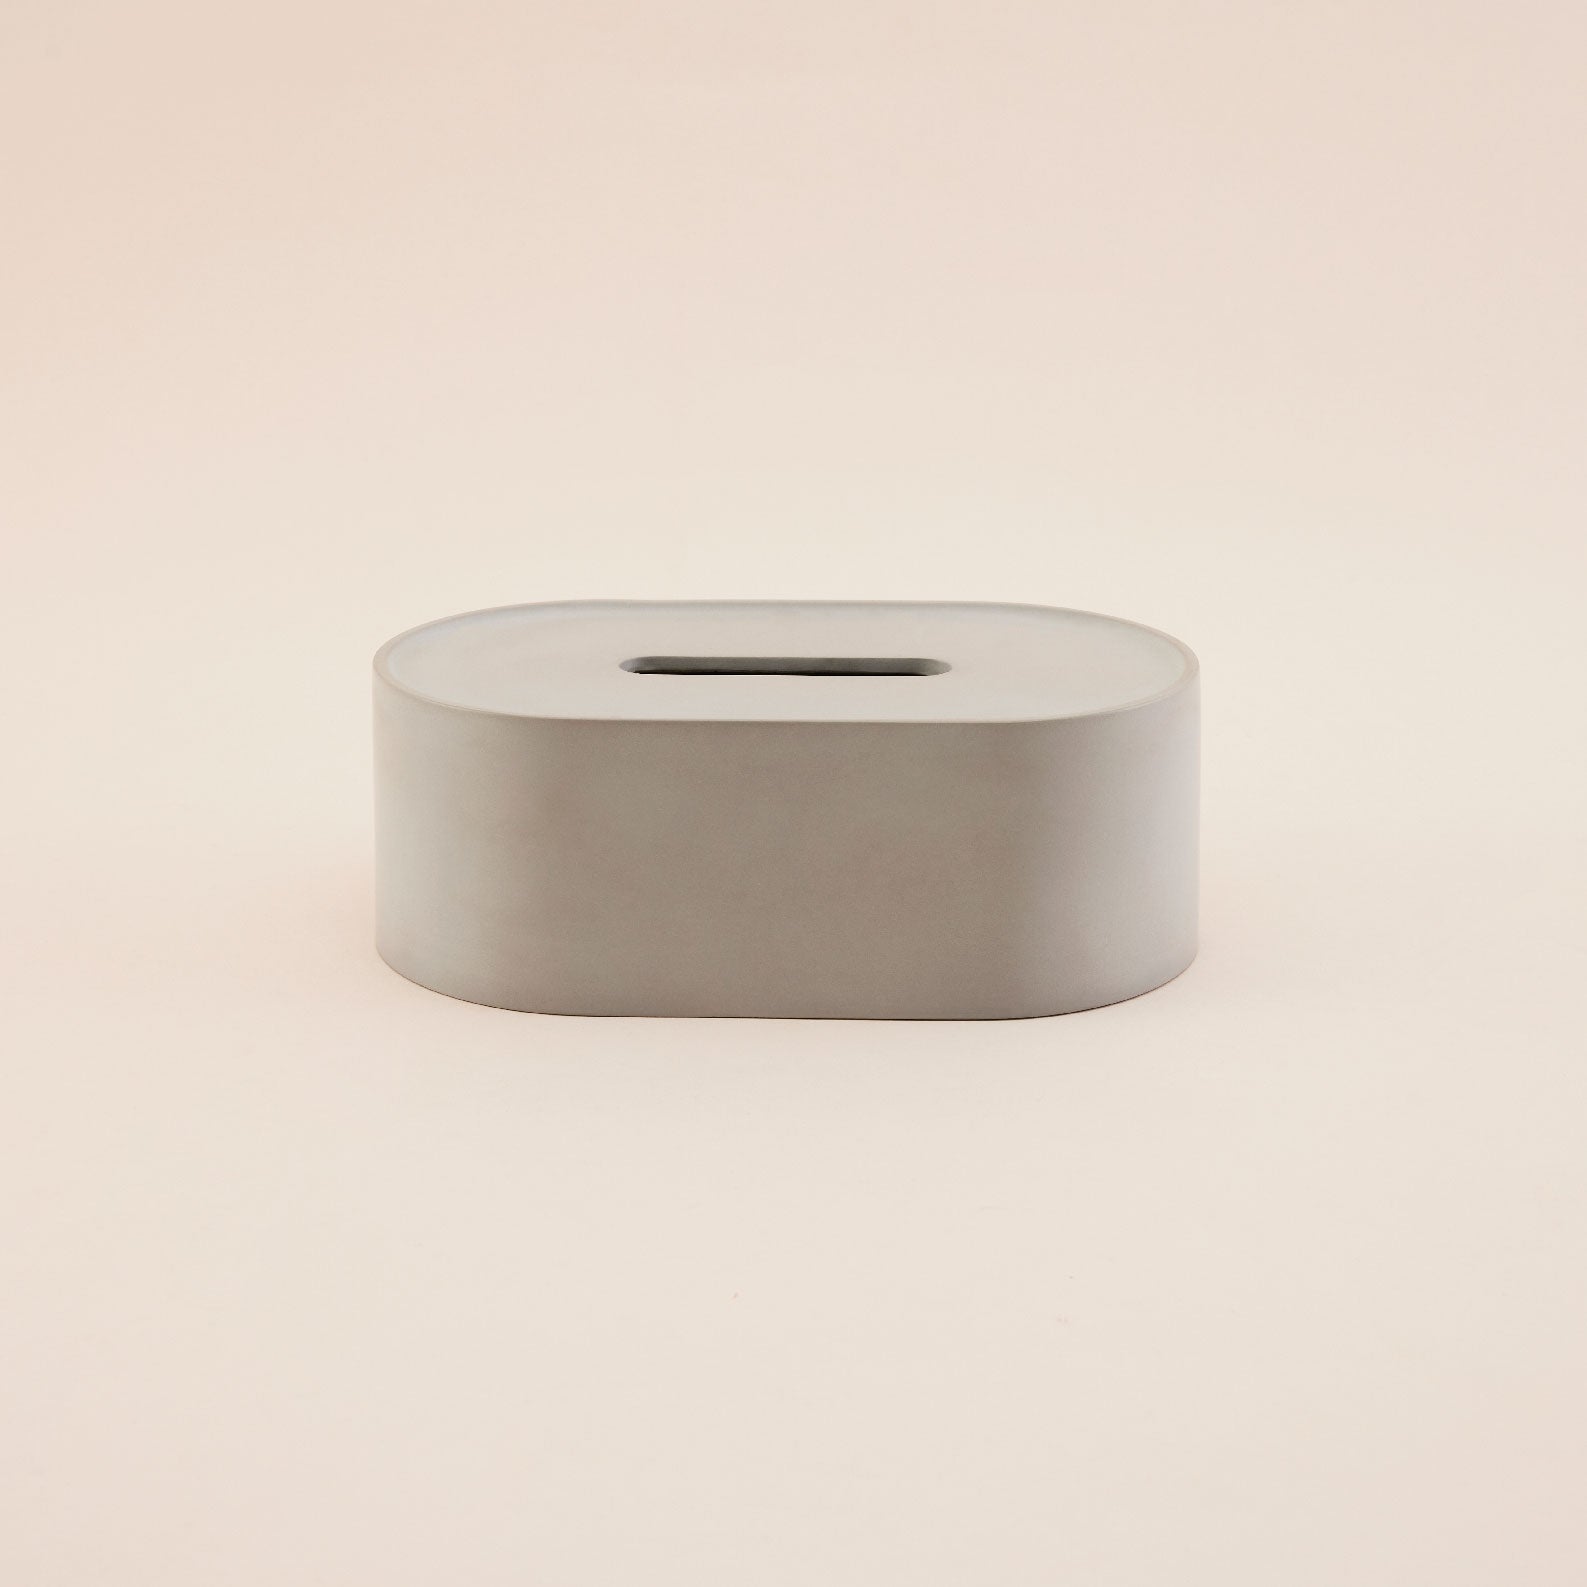 Grey Rounded Concrete Tissue Box |  กล่องใส่กระดาษทิชชู แบบแผ่น ทรงรี